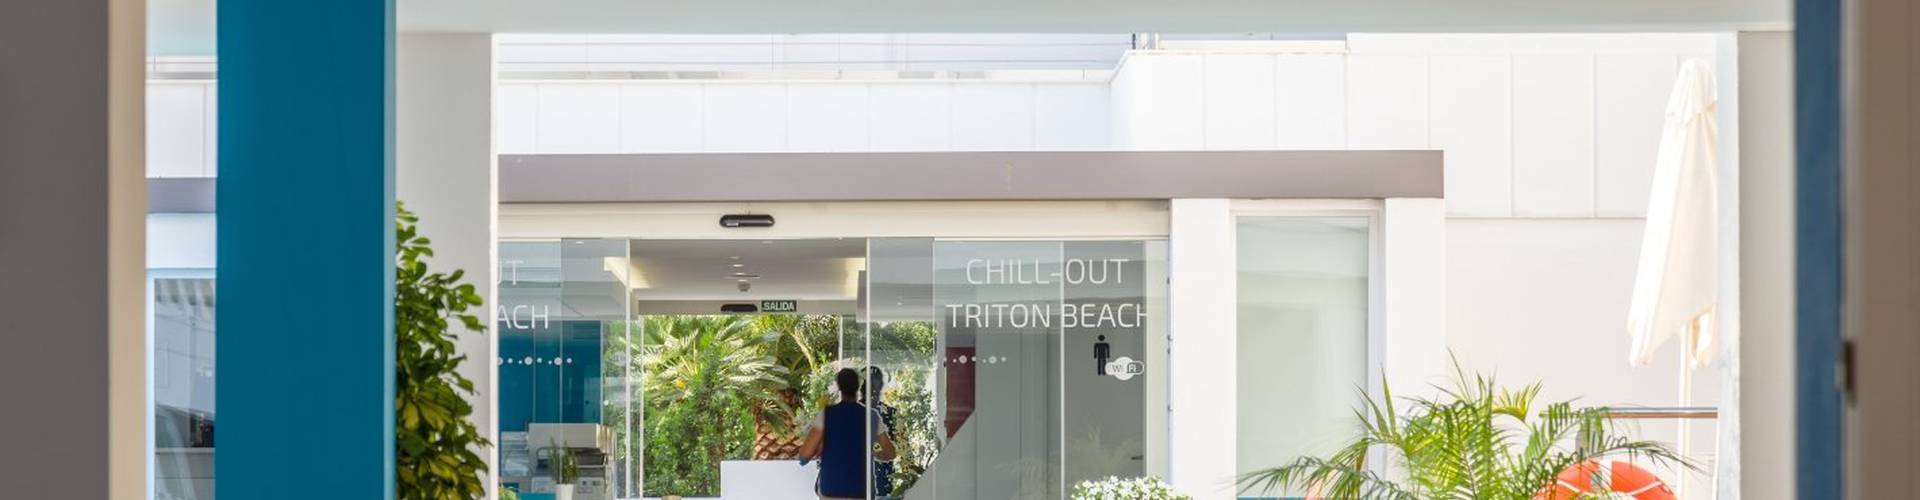 Hotel Triton - Cala Ratjada - Impressum Hotel Triton Beach